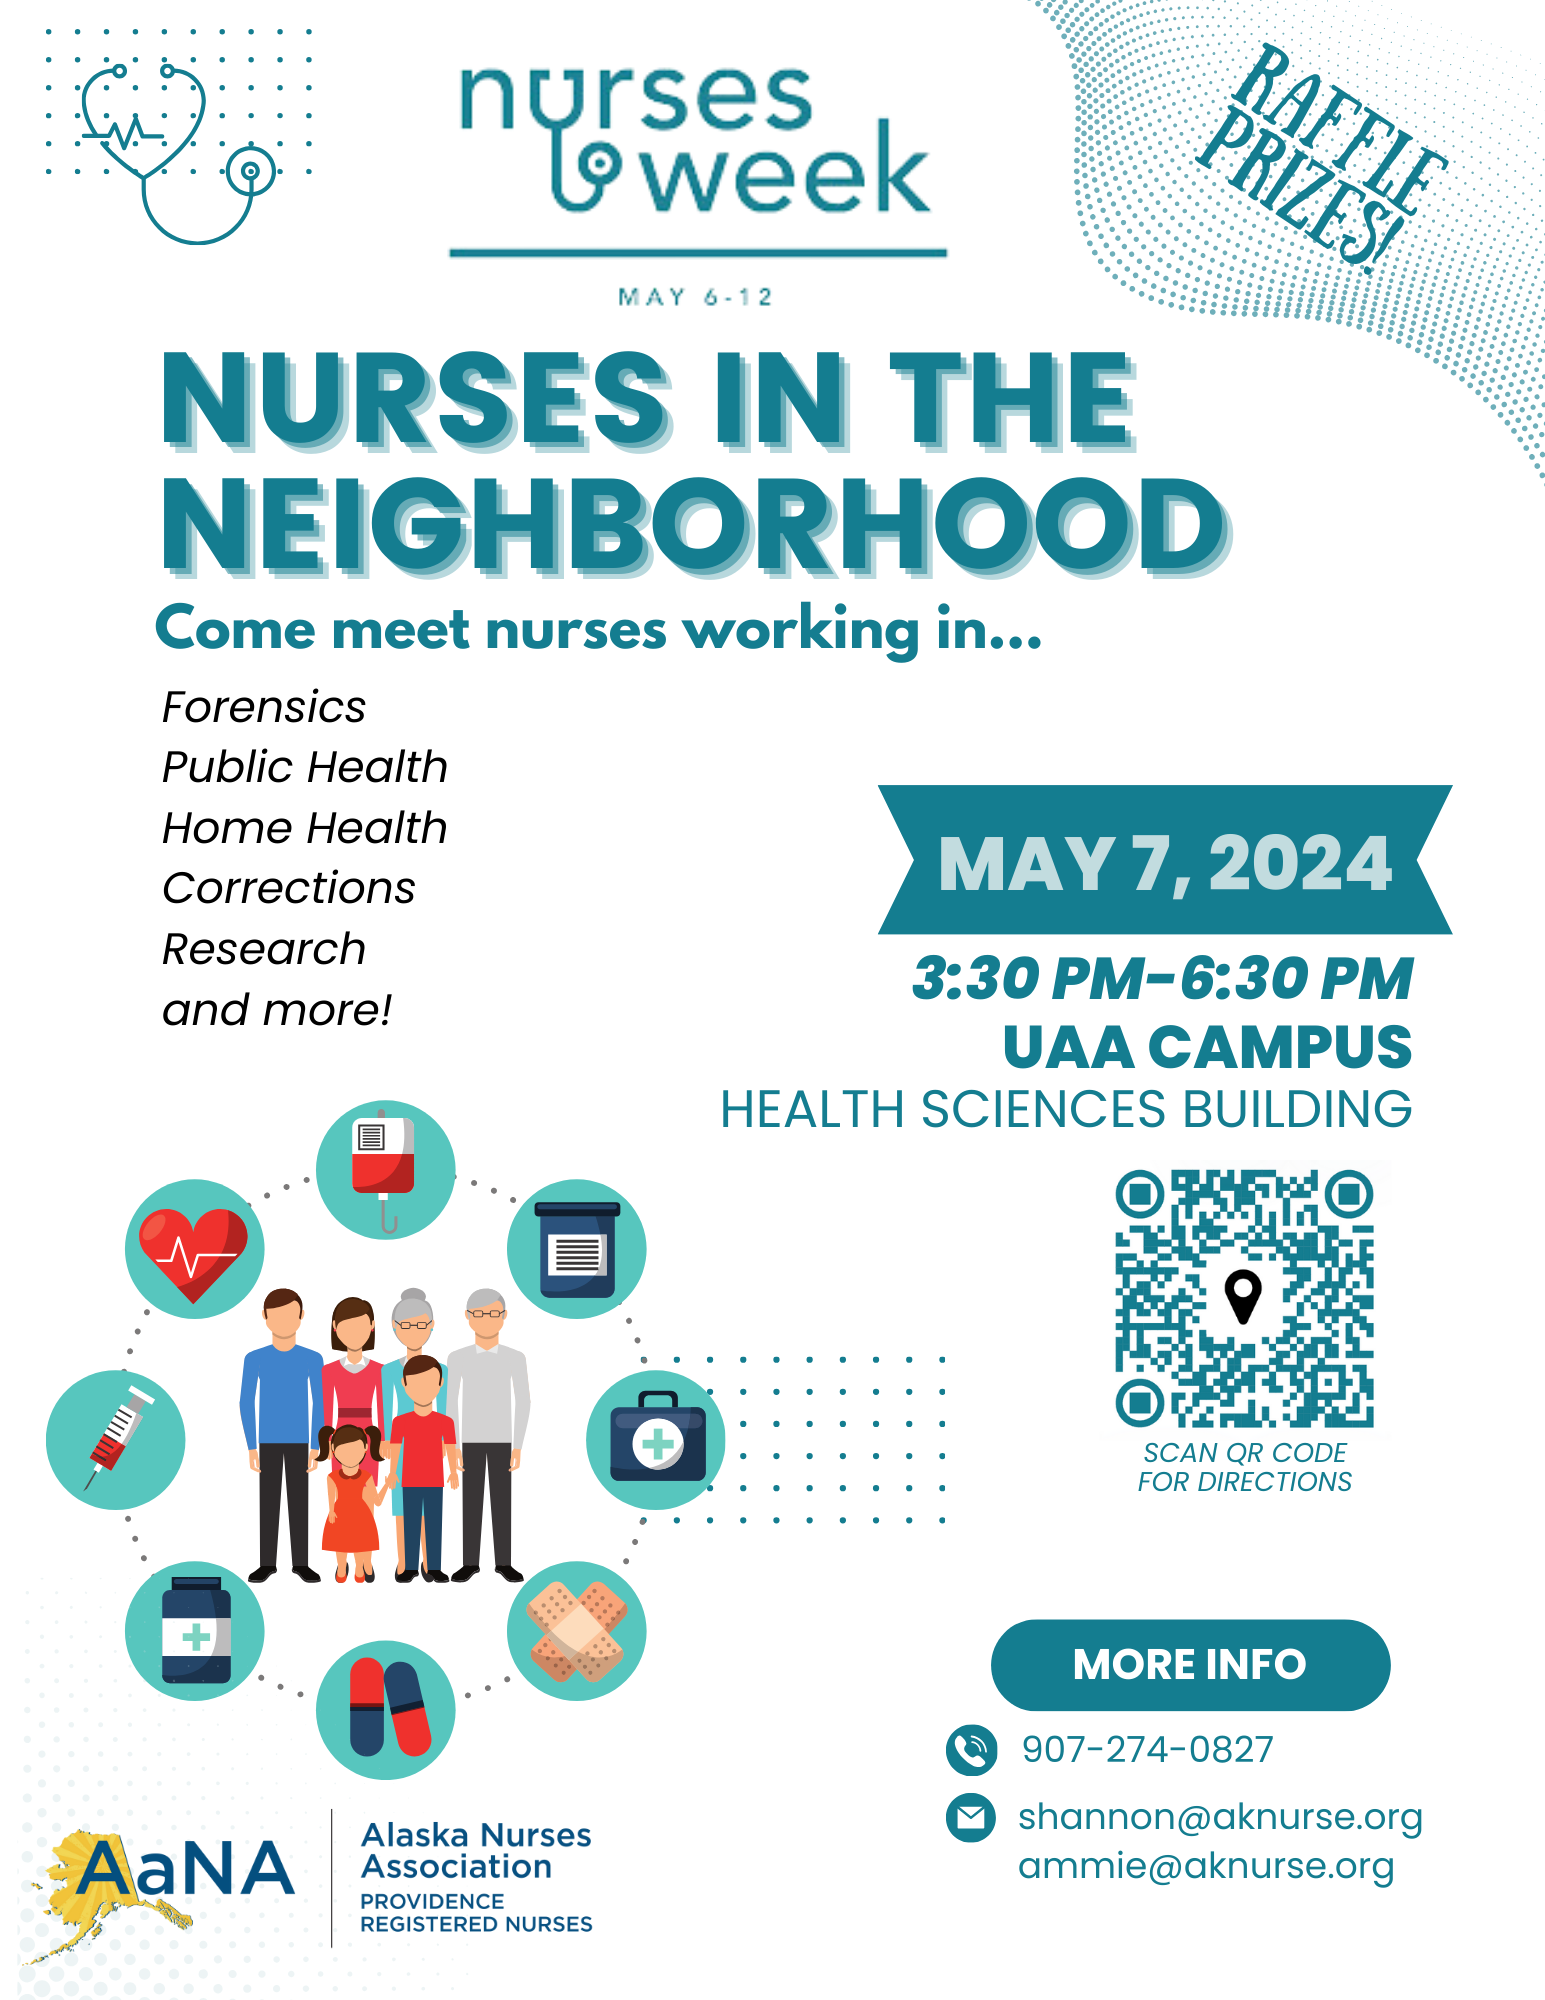 Meet the Nurses in the Neighborhood